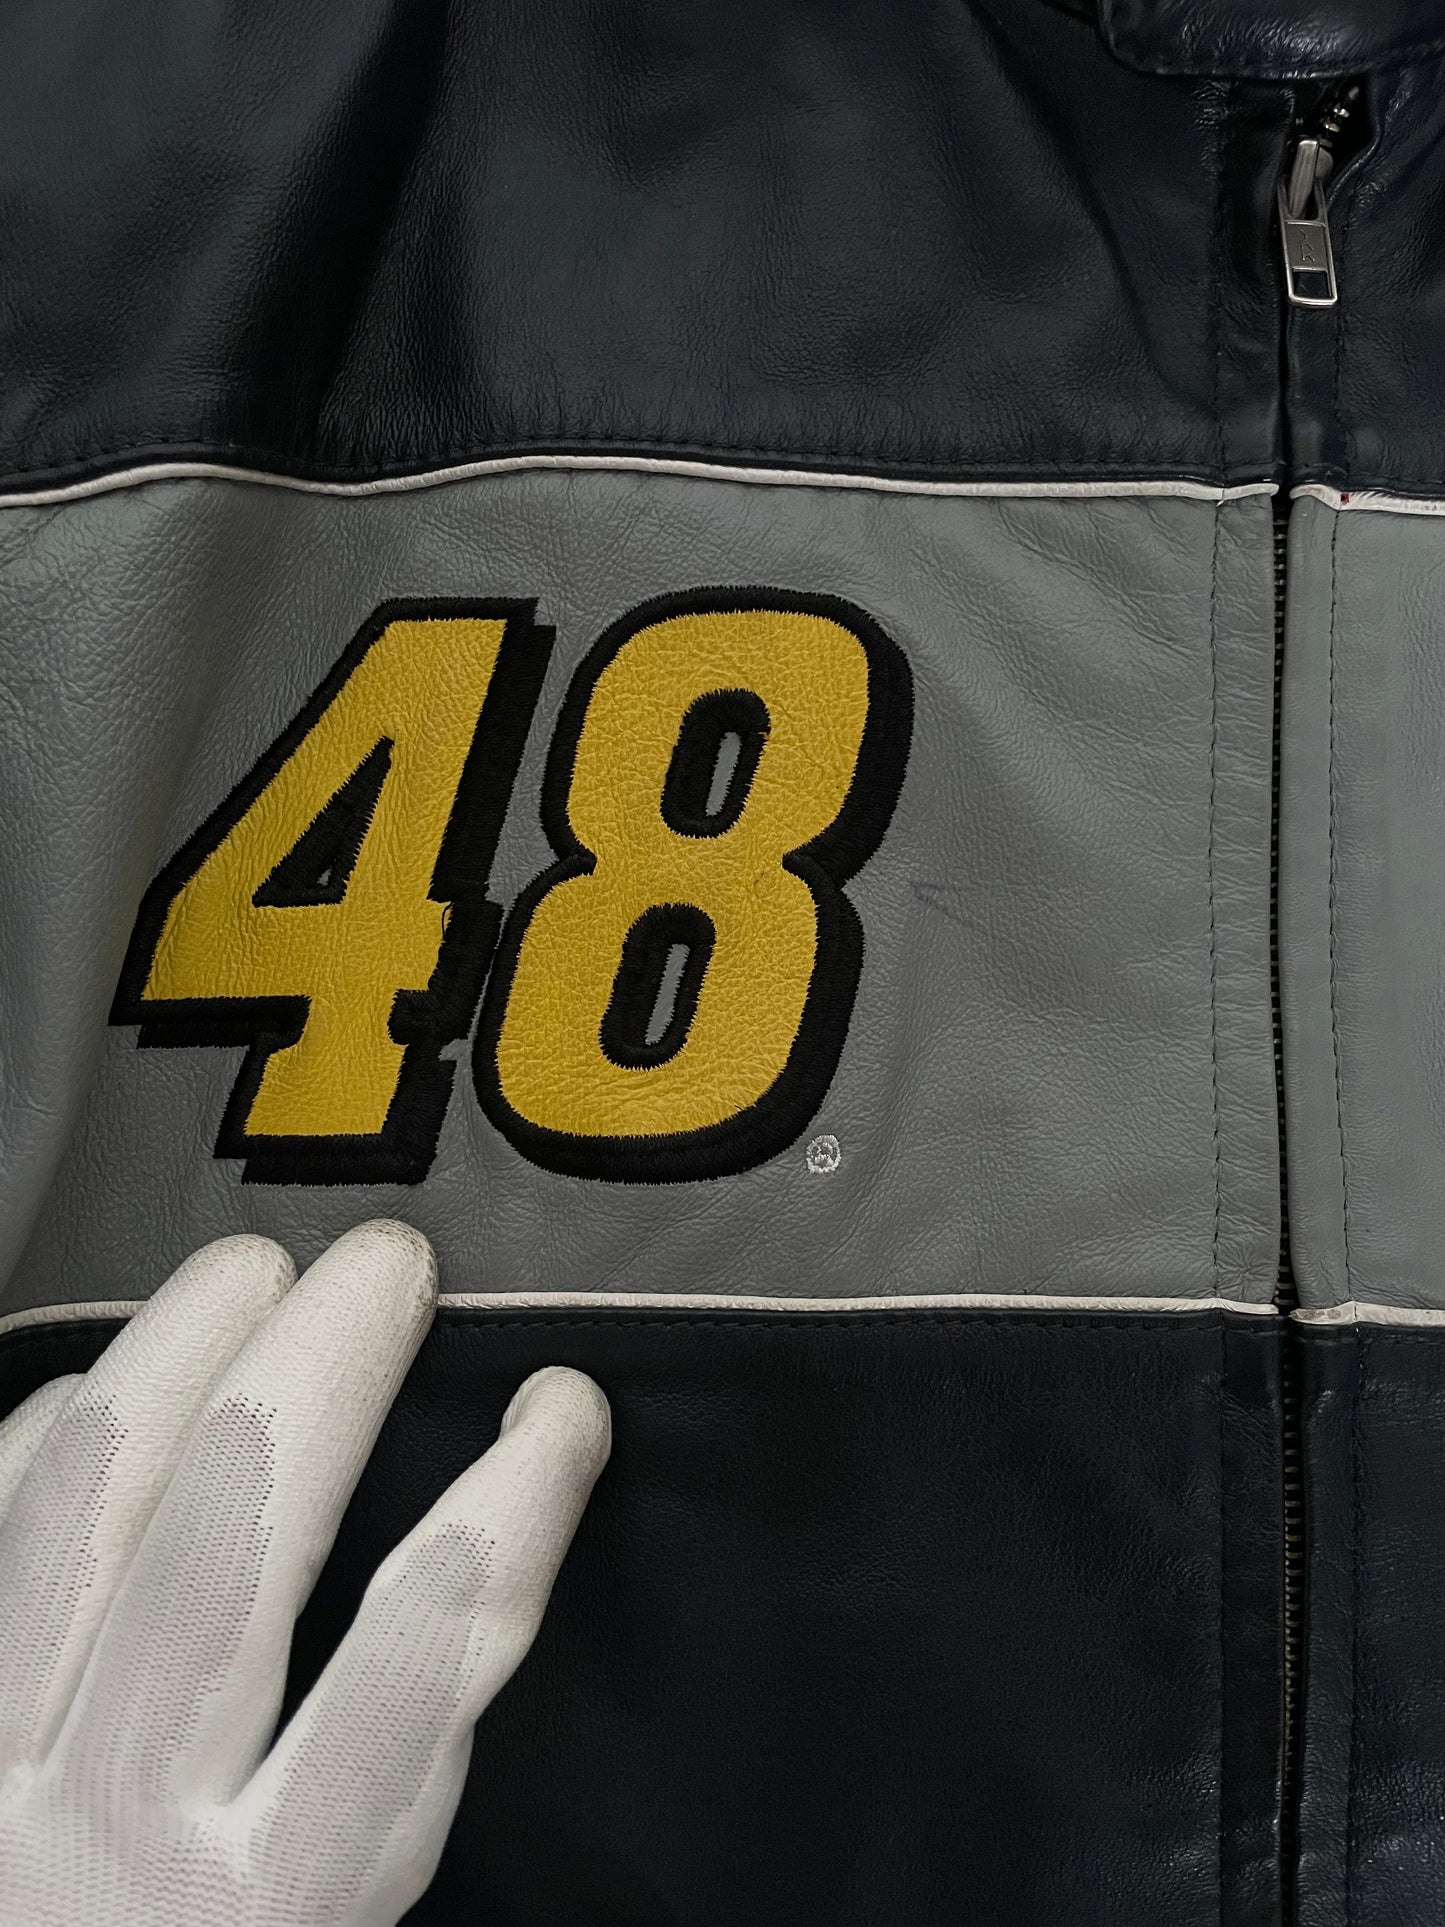 B Jacket Racing / hase authentics racing sports de jimmie johnson #48 nascar